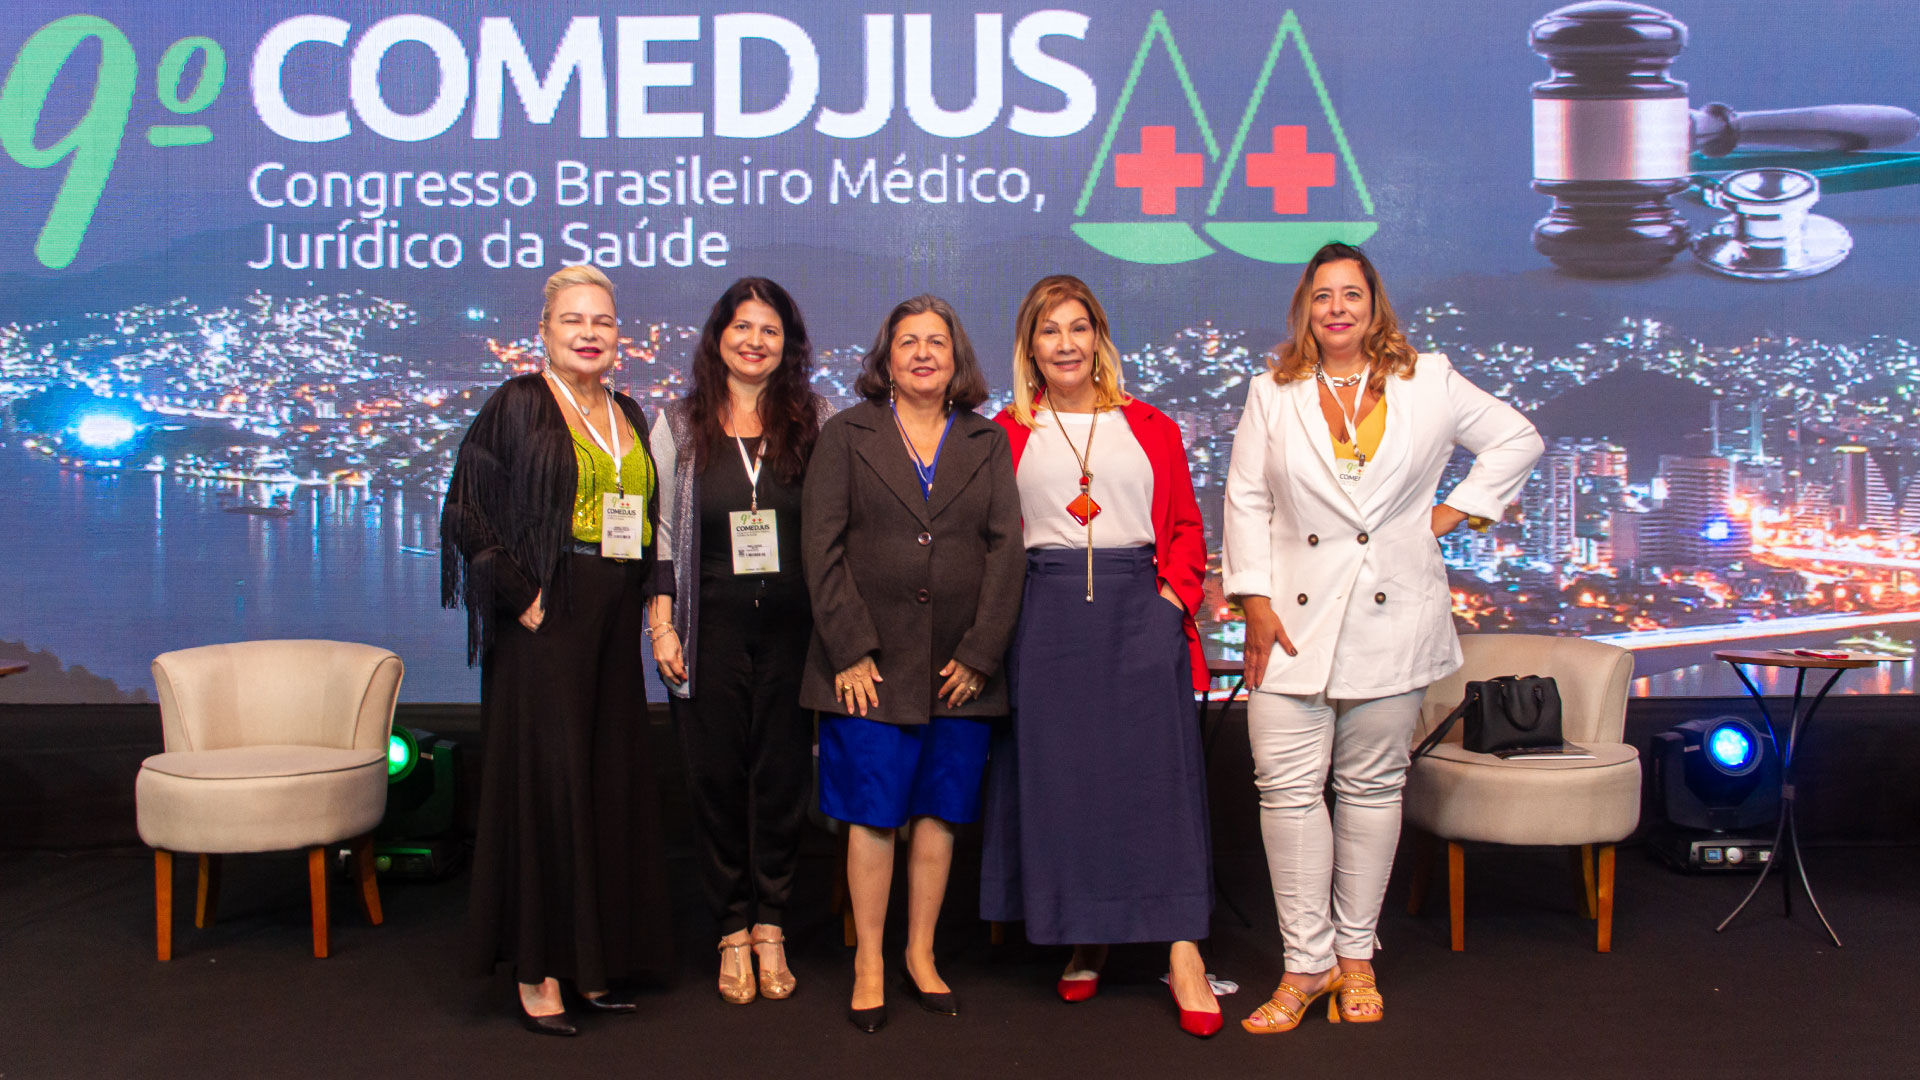 9 congresso brasileiro medico juridico da saude 2